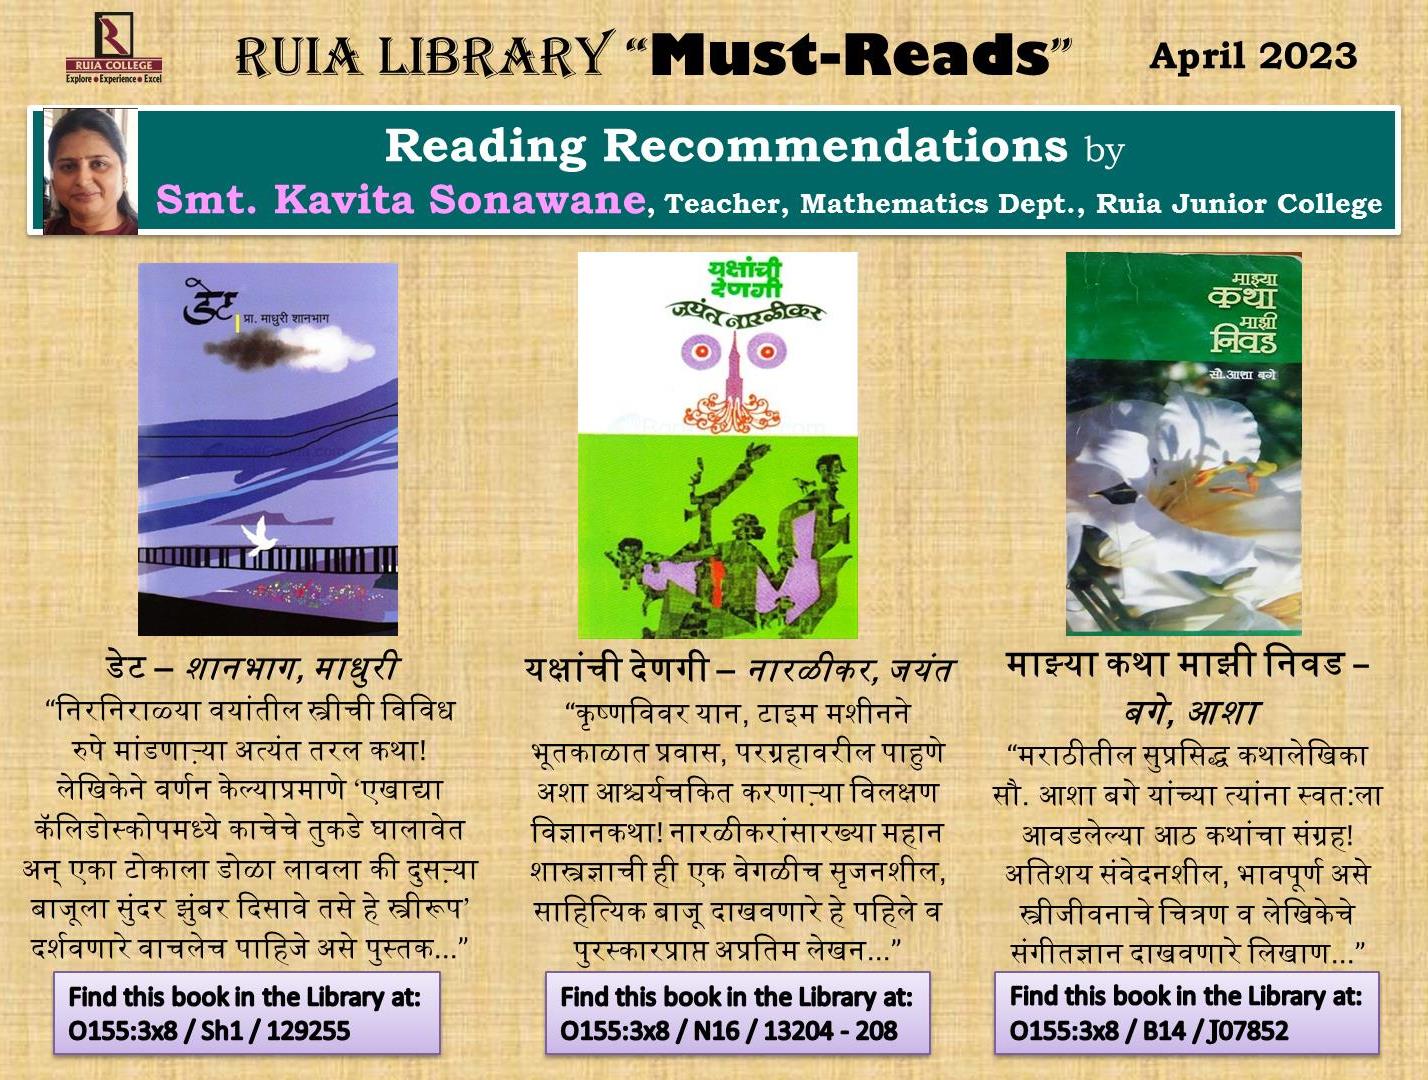 Reading recommendations by Smt. Kavita Sonawane